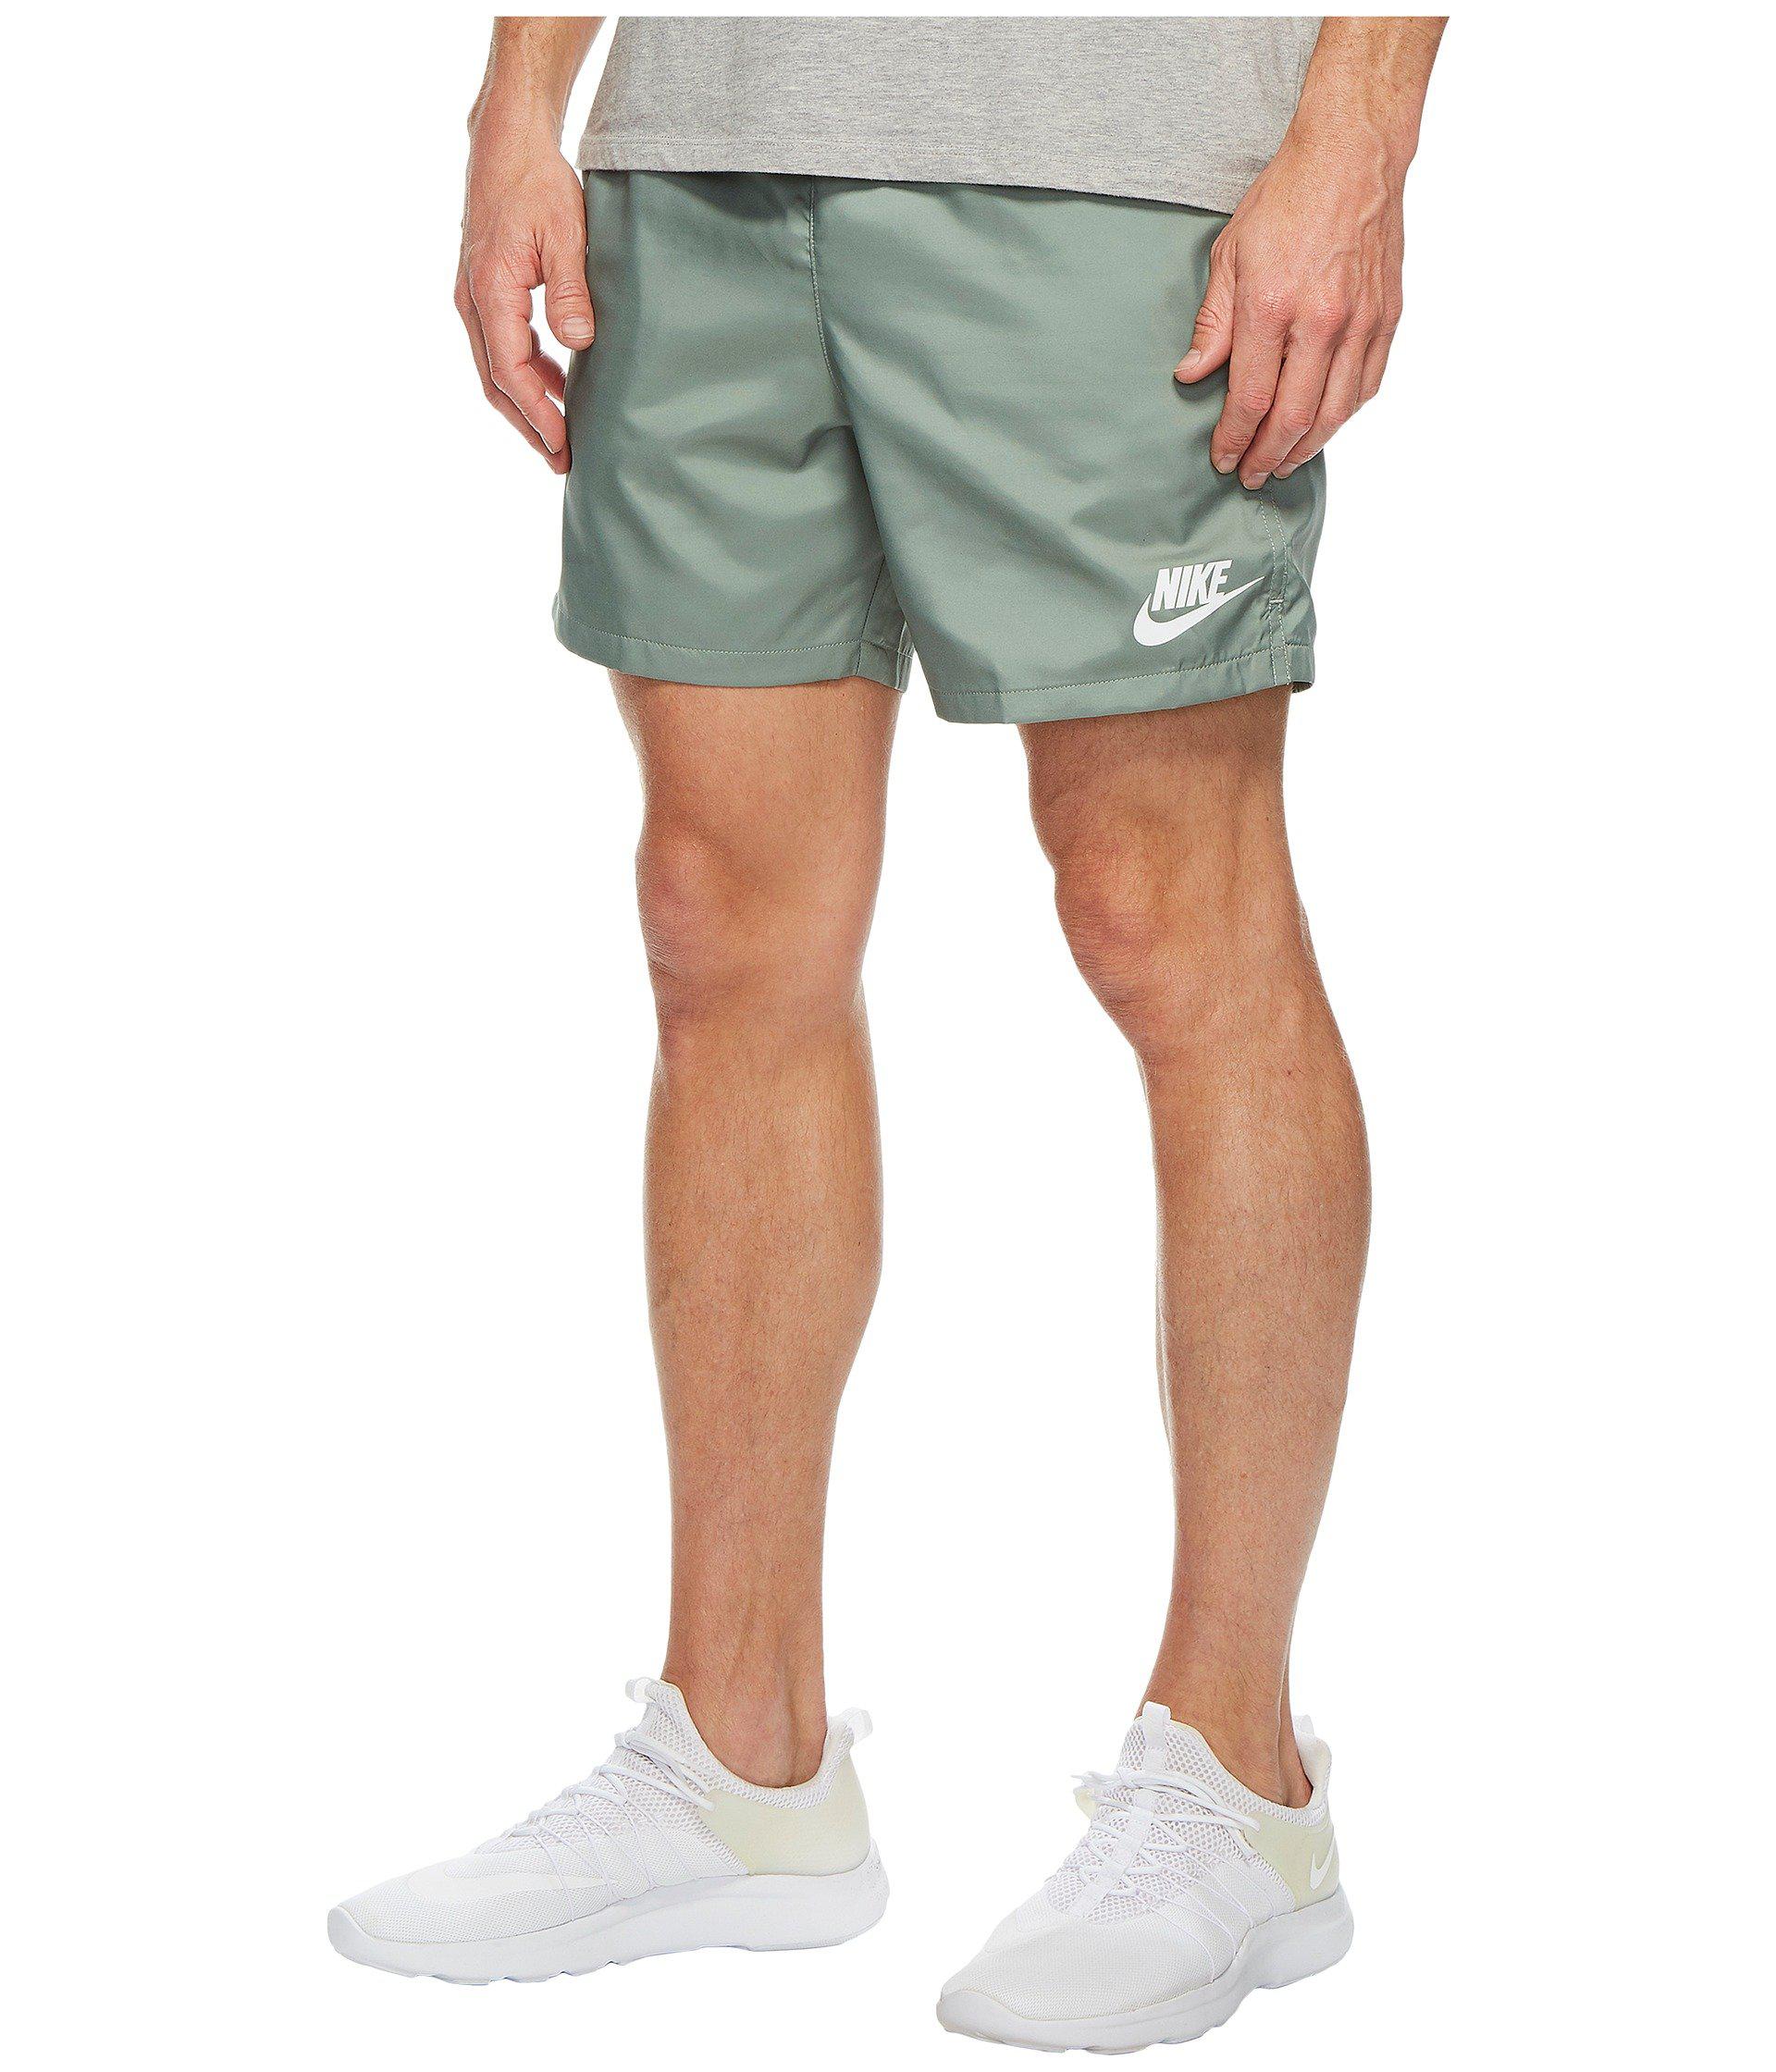 nike men's woven flow shorts cheap online